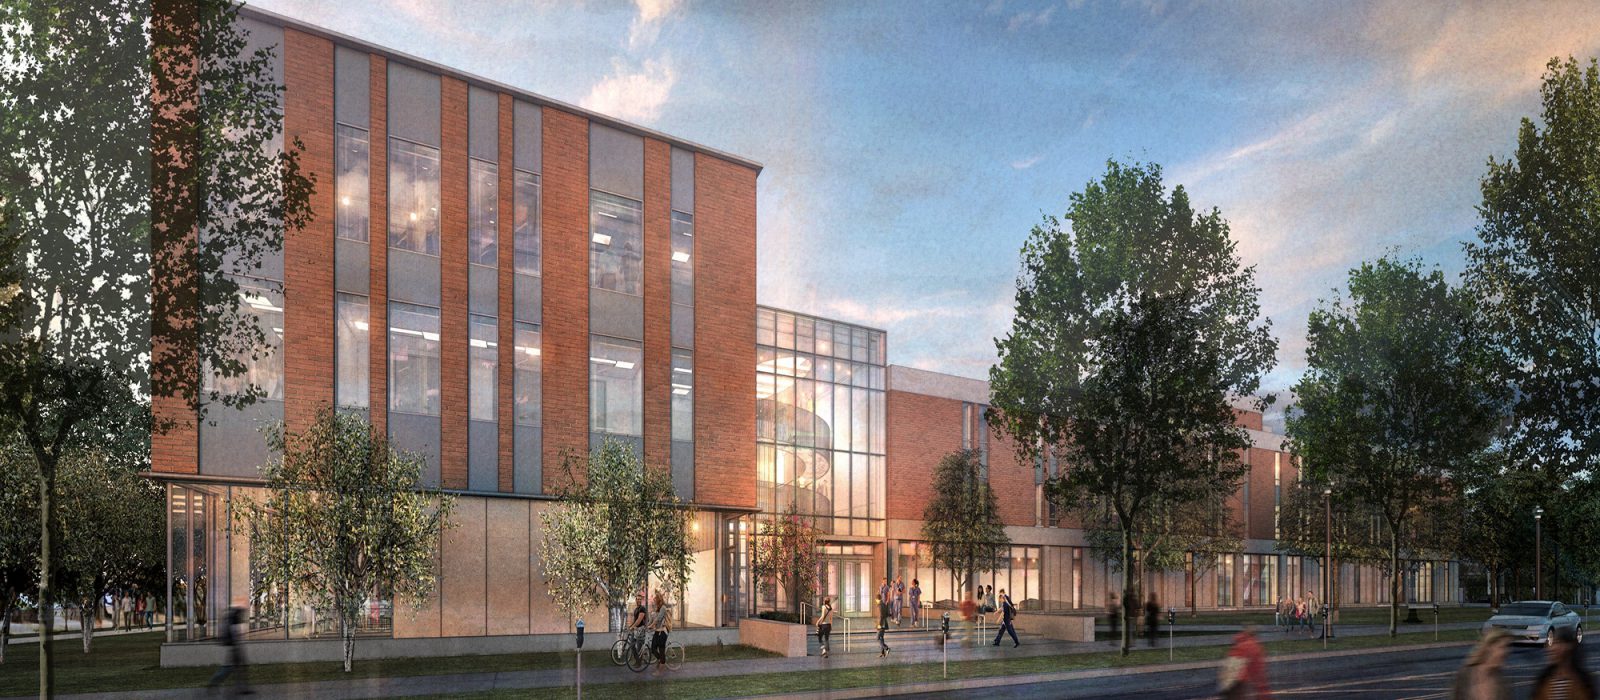 College of Nursing Expansion + Renovation | The Ohio State University